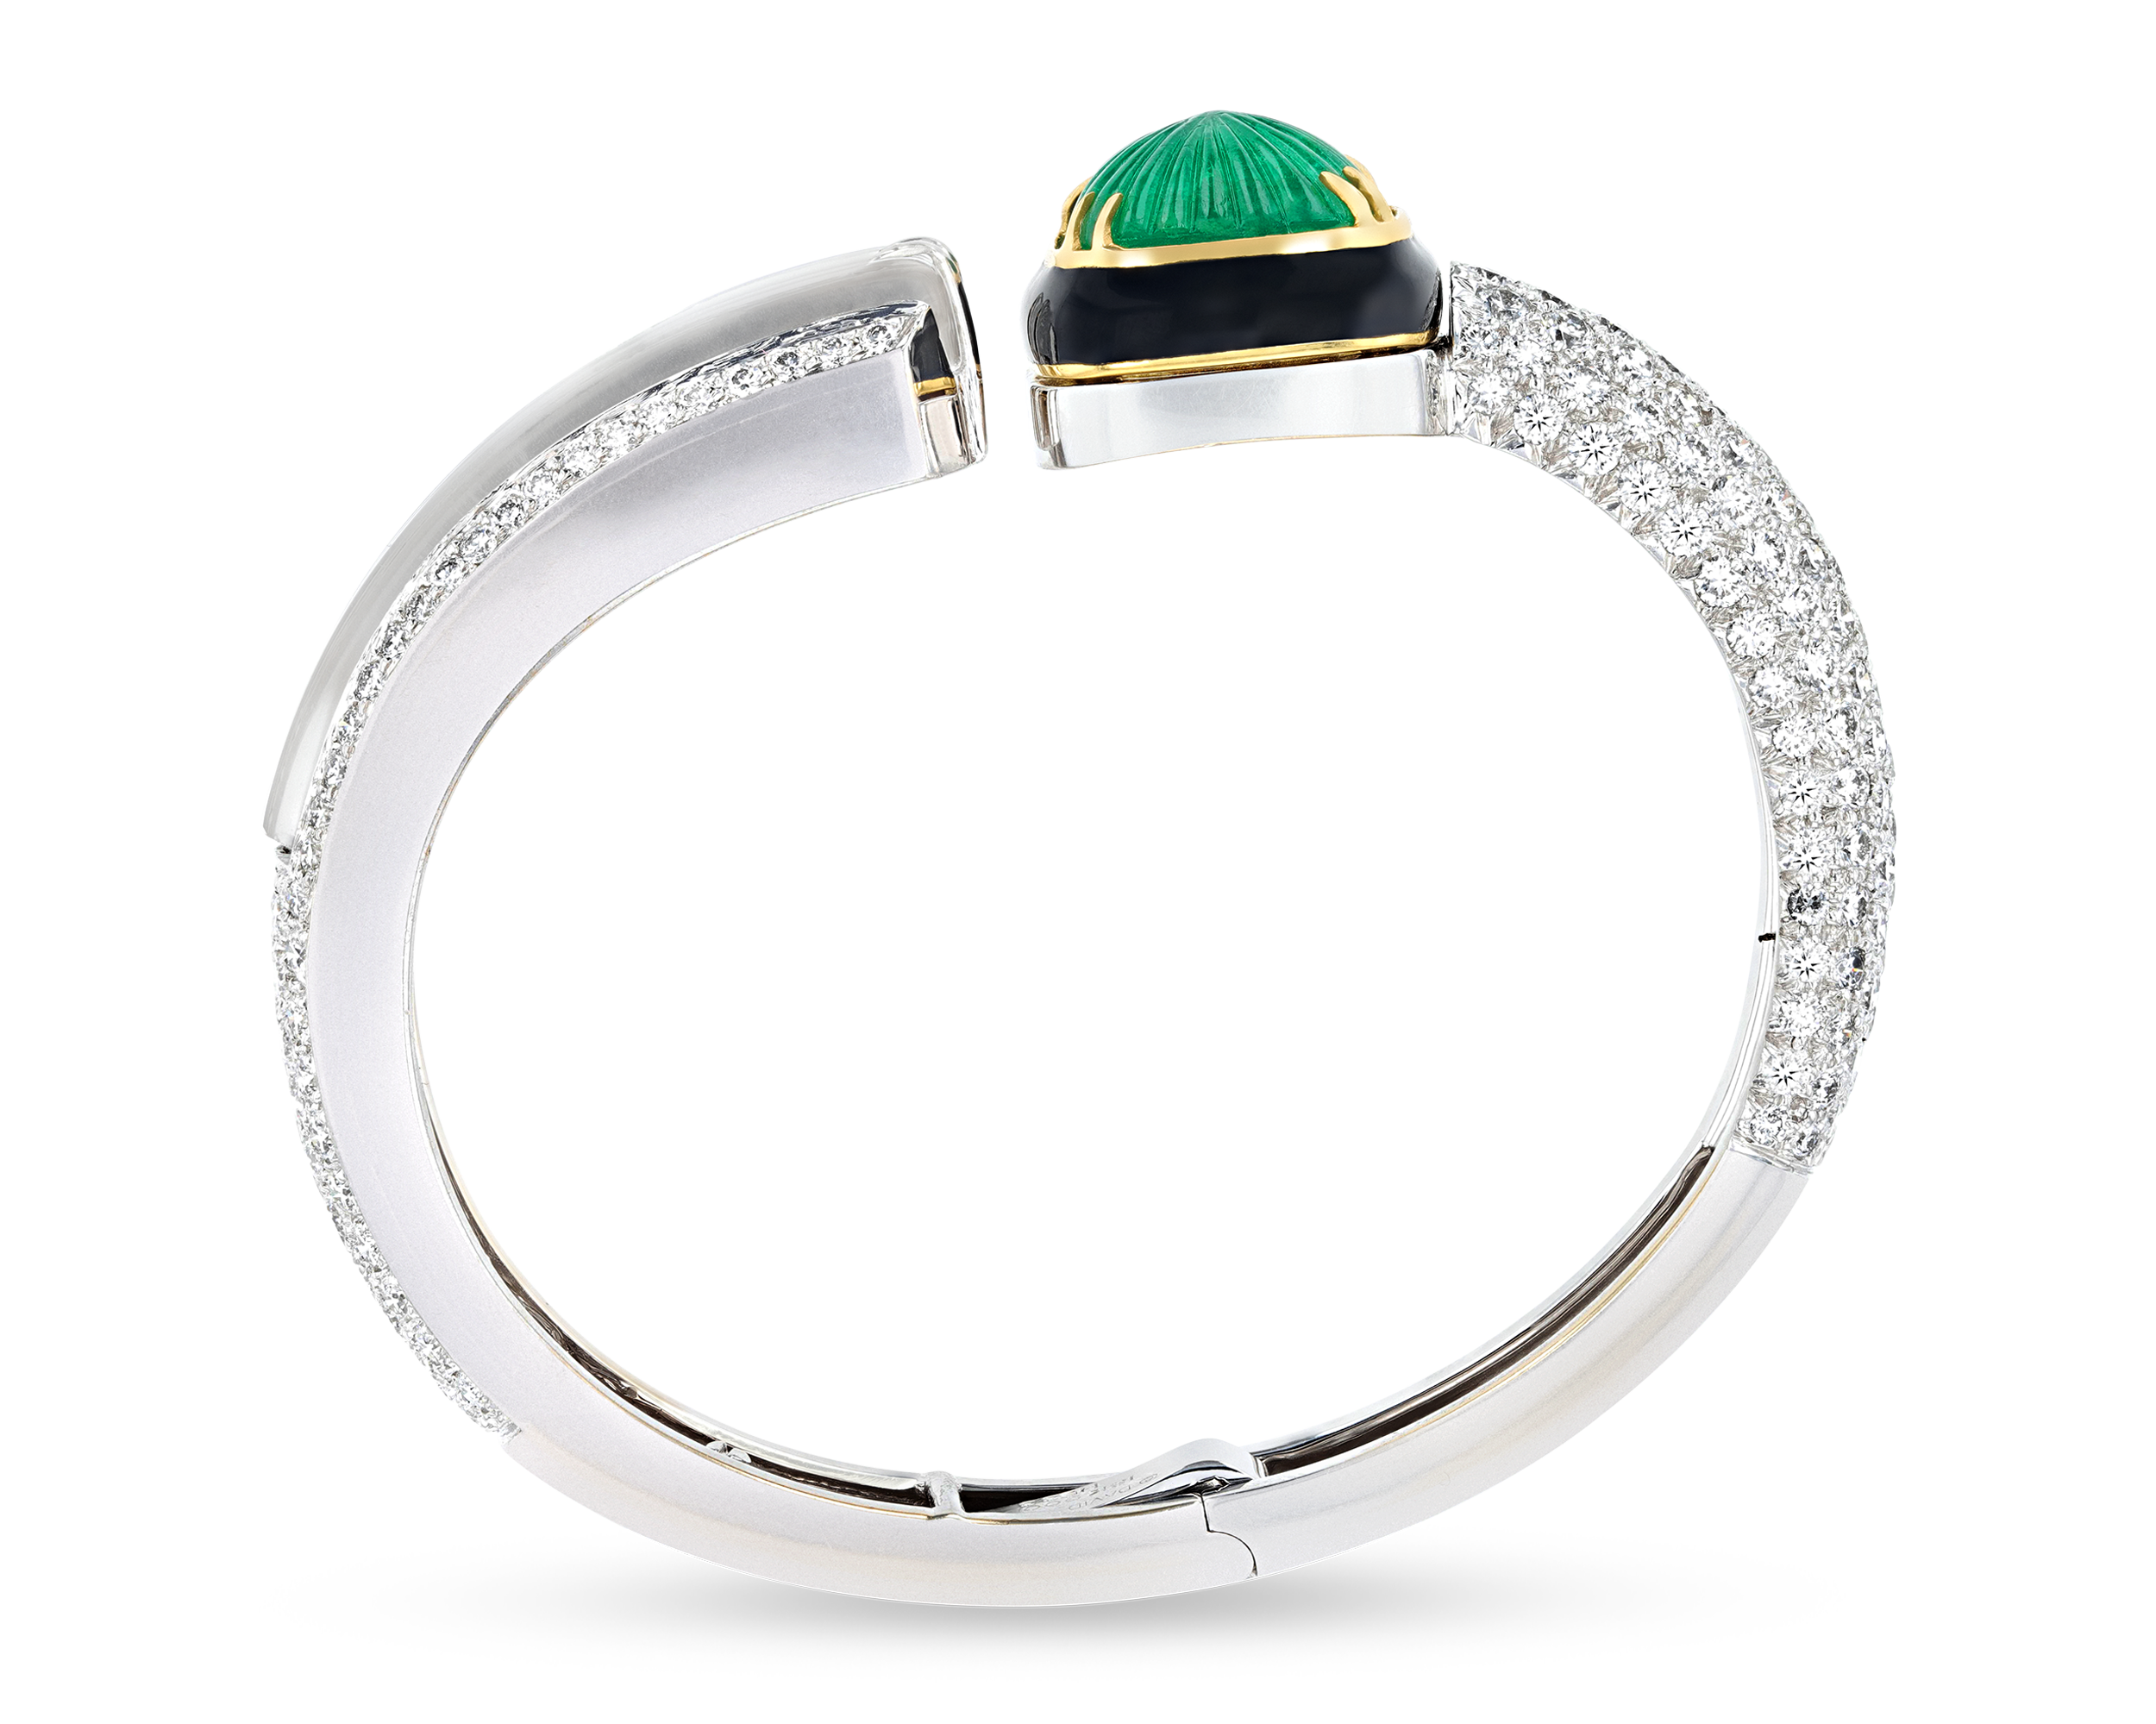 David Webb Emerald, Diamond & Rock Crystal Bracelet